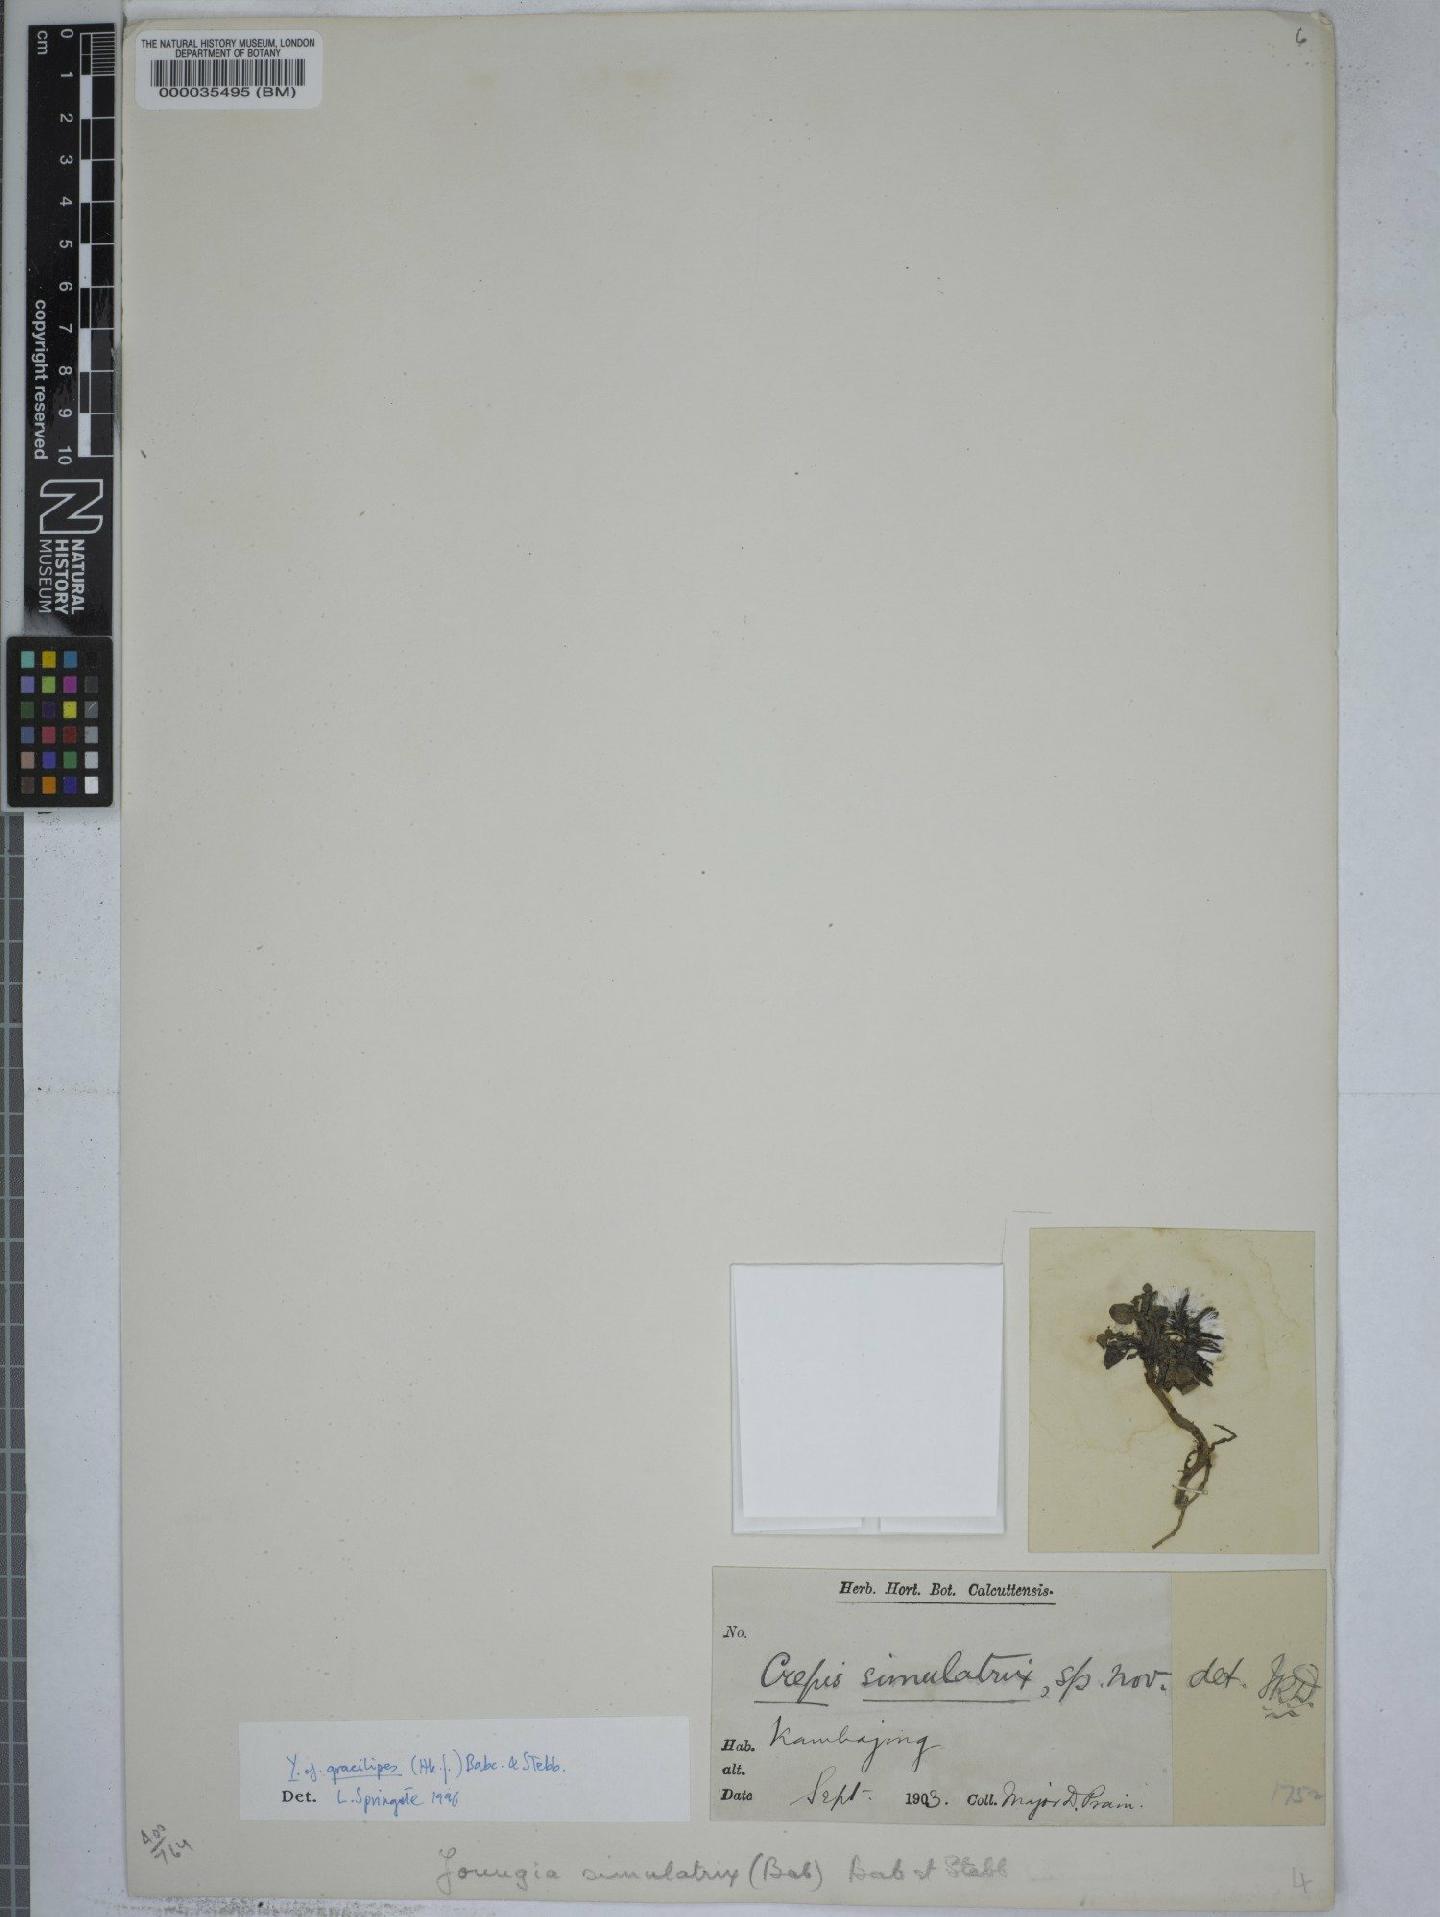 To NHMUK collection (Youngia gracilipes (Hook.f.) Babc. & Stebb.; NHMUK:ecatalogue:9149097)